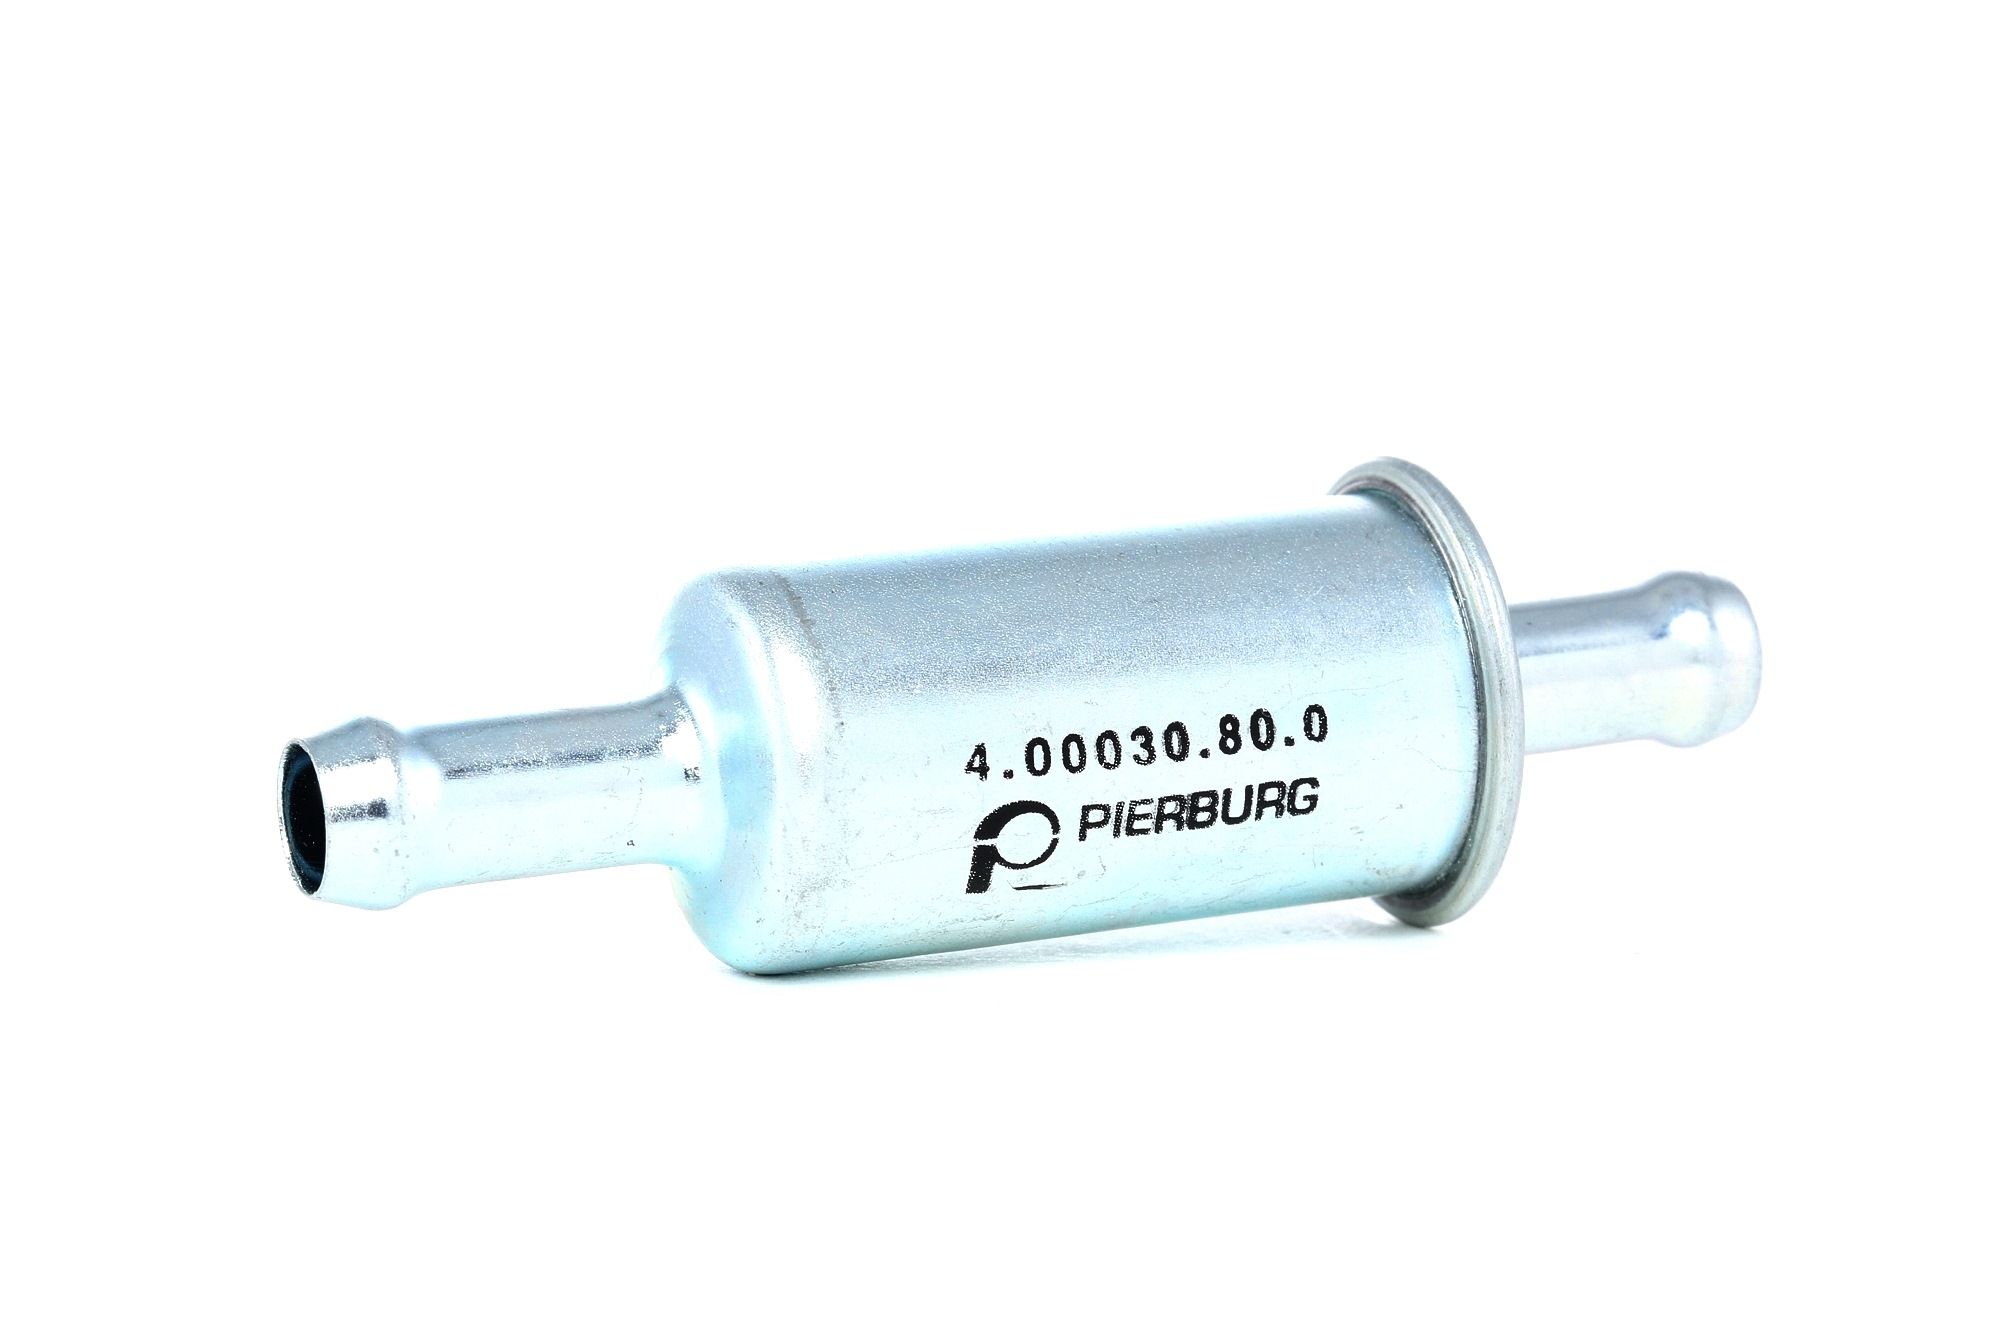 PIERBURG 4.00030.80.0 Palivový filtr Filtr zabudovaný do potrubí, 8mm Honda v originální kvalitě